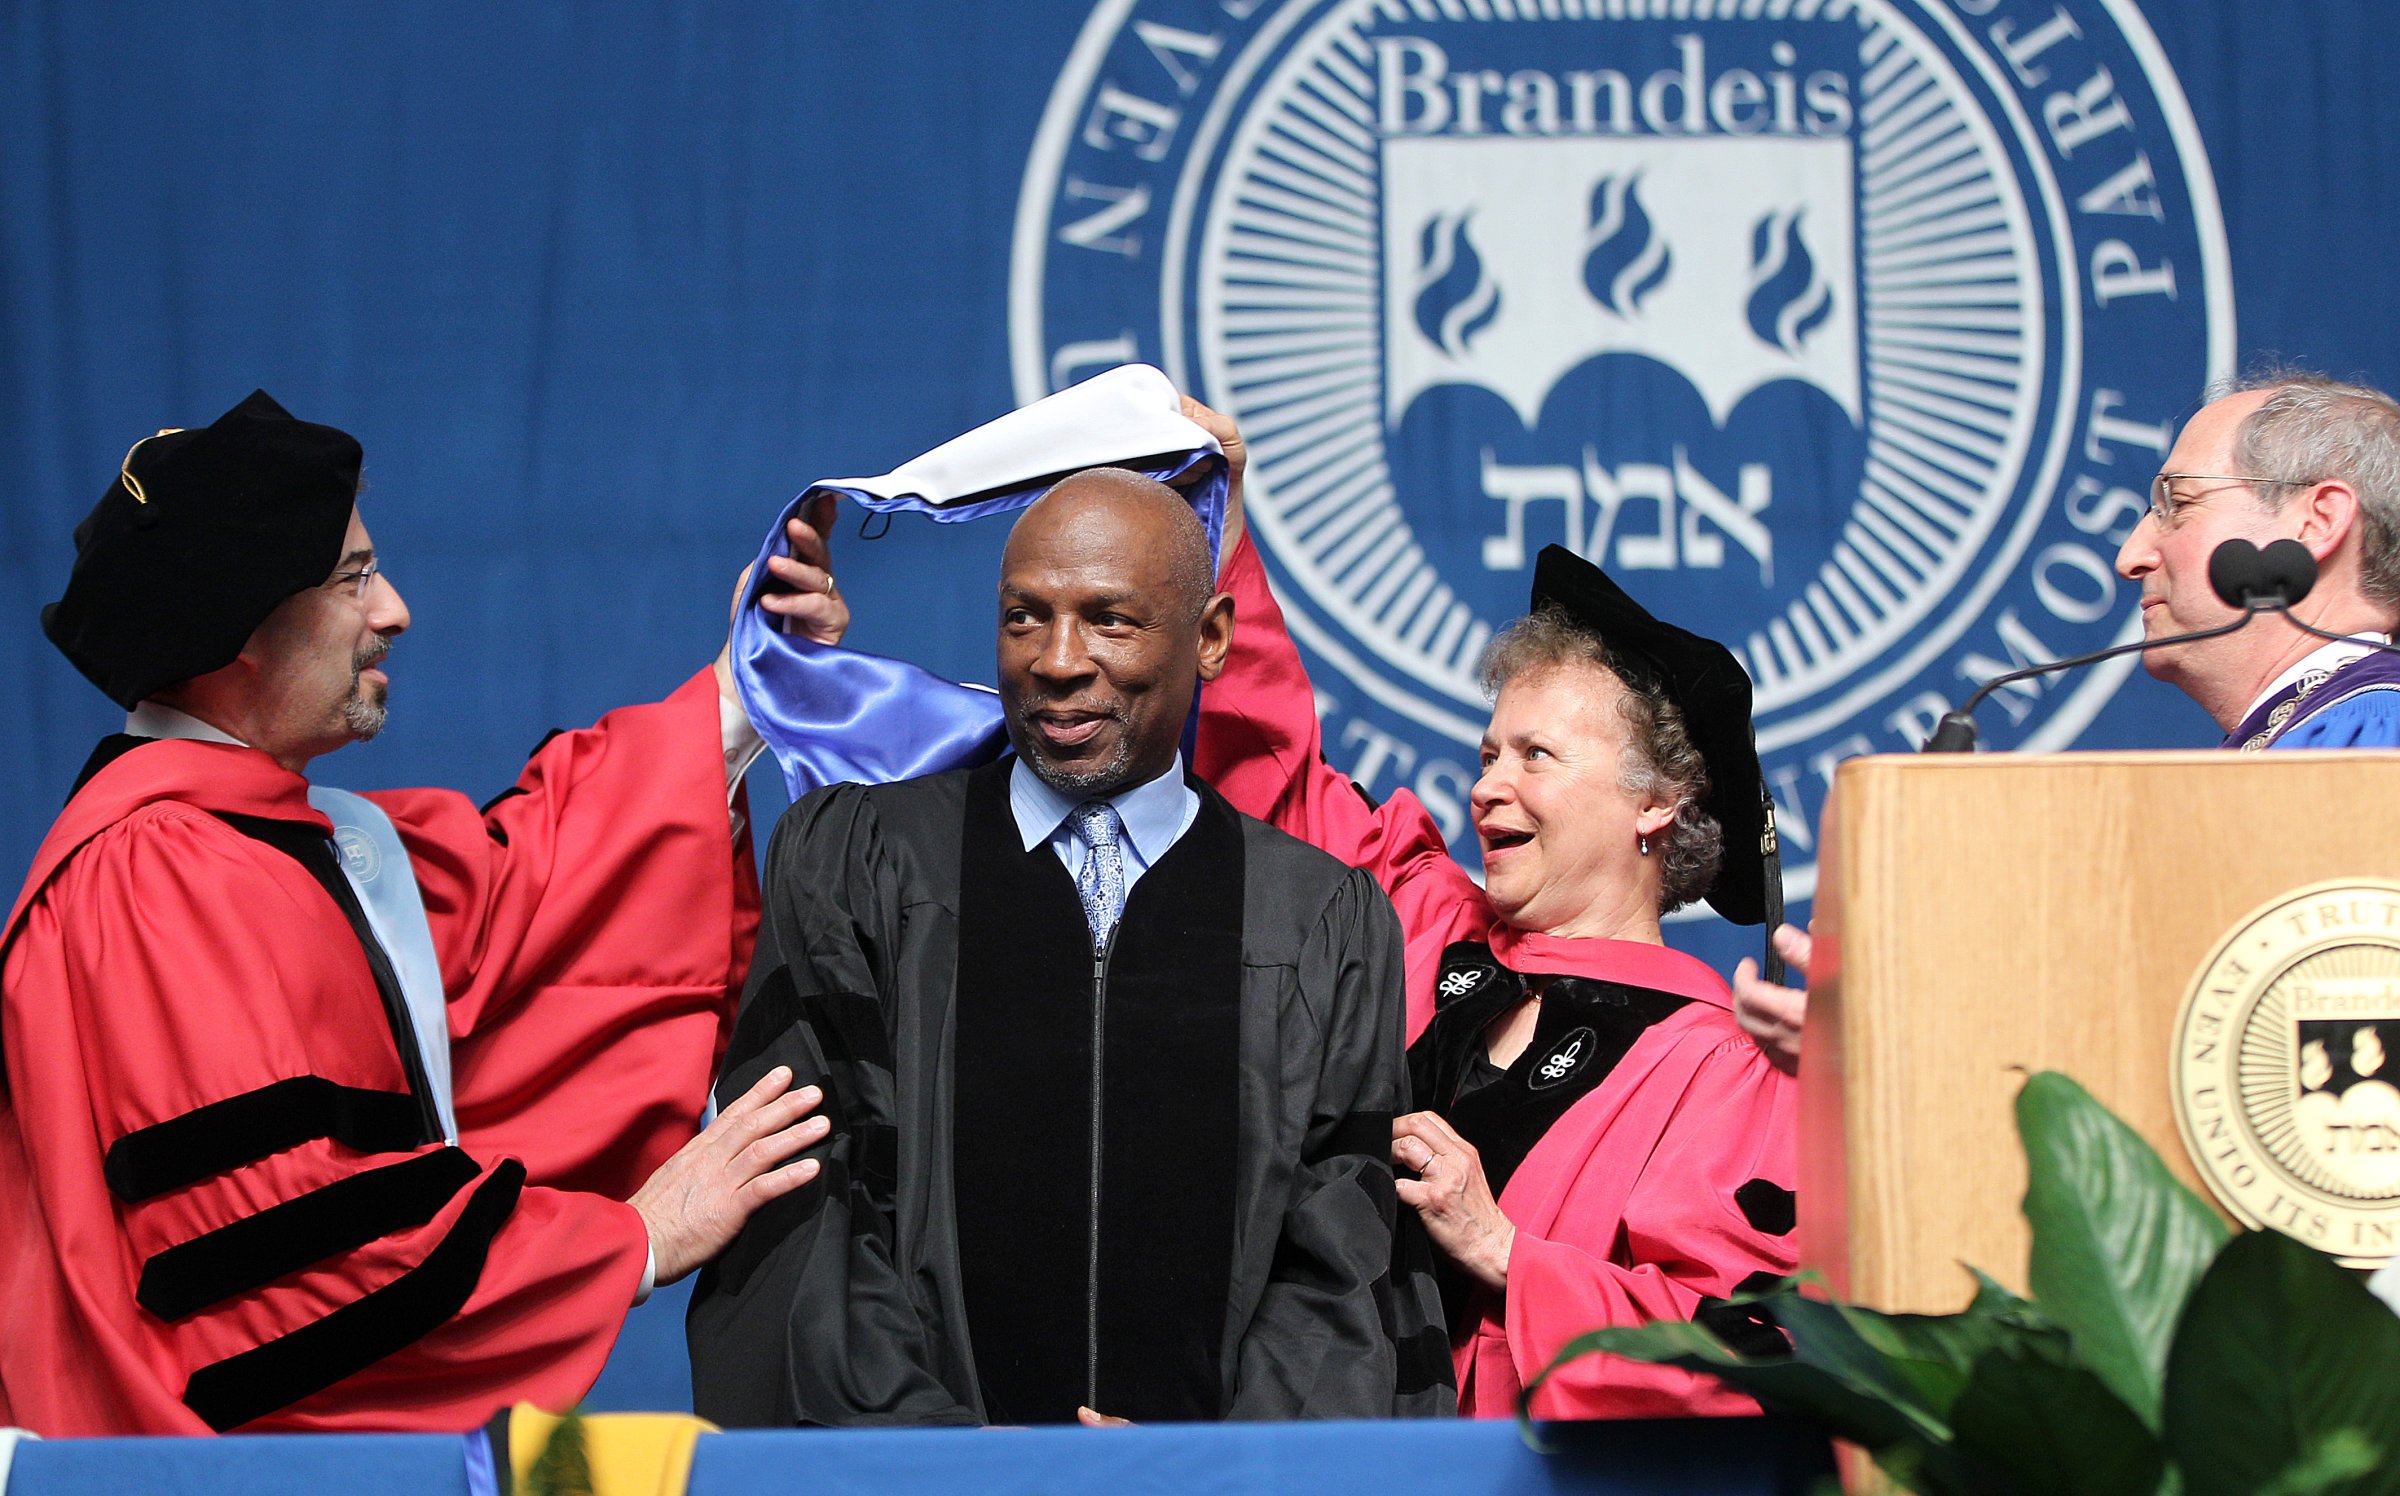 Brandeis University 63rd Commencement